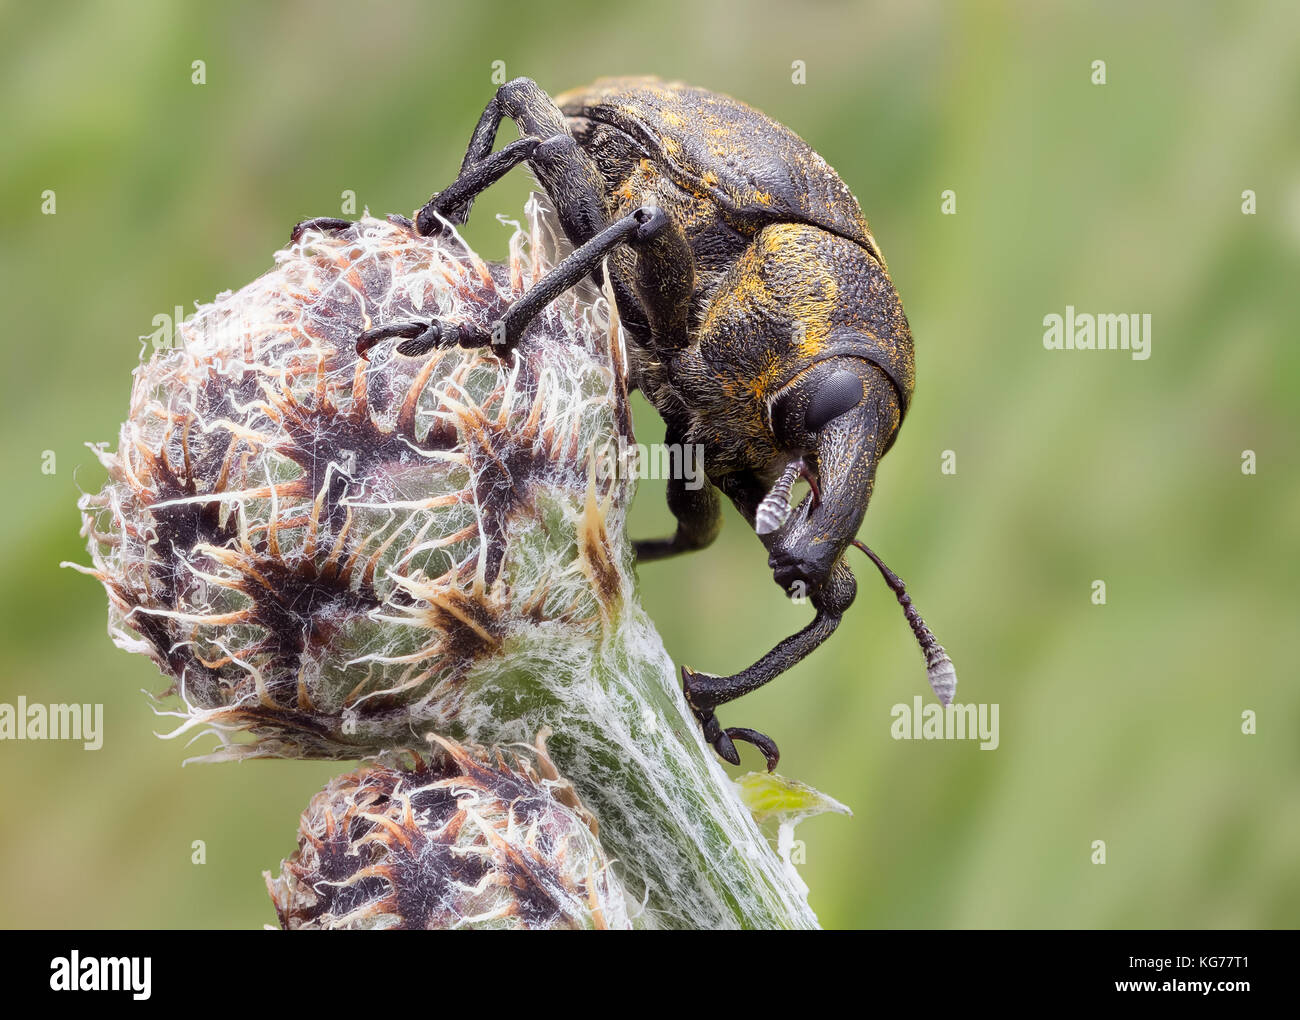 Rüsselkäfer / Bug Beetle  weevil  snout beetle A specimen of Involvulus caeruleus, tooth-nosed Black Vine Weevil Stock Photo